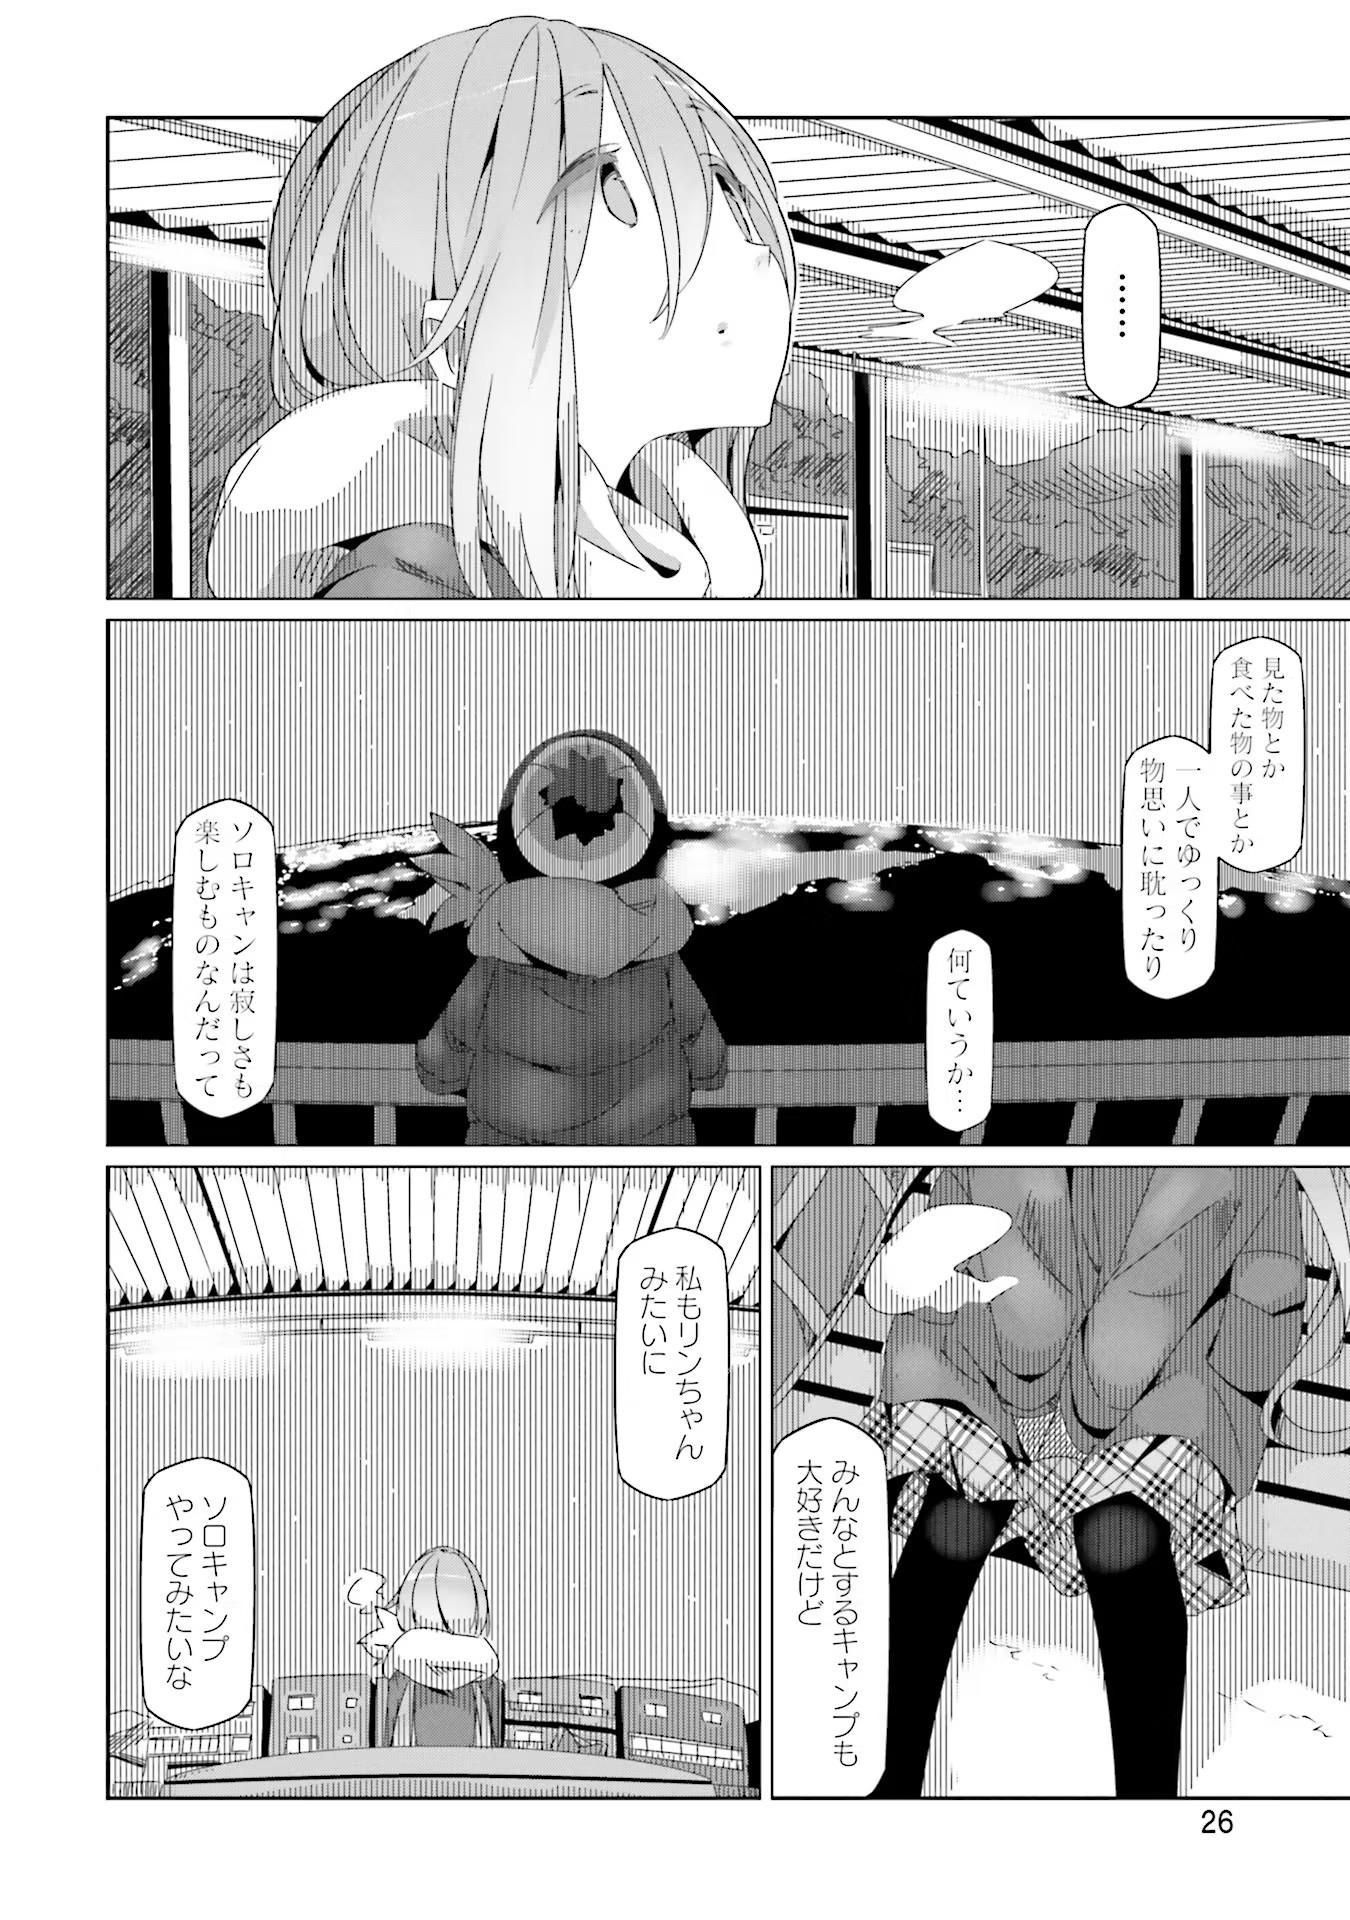 Yuru Camp - Chapter 29 - Page 28